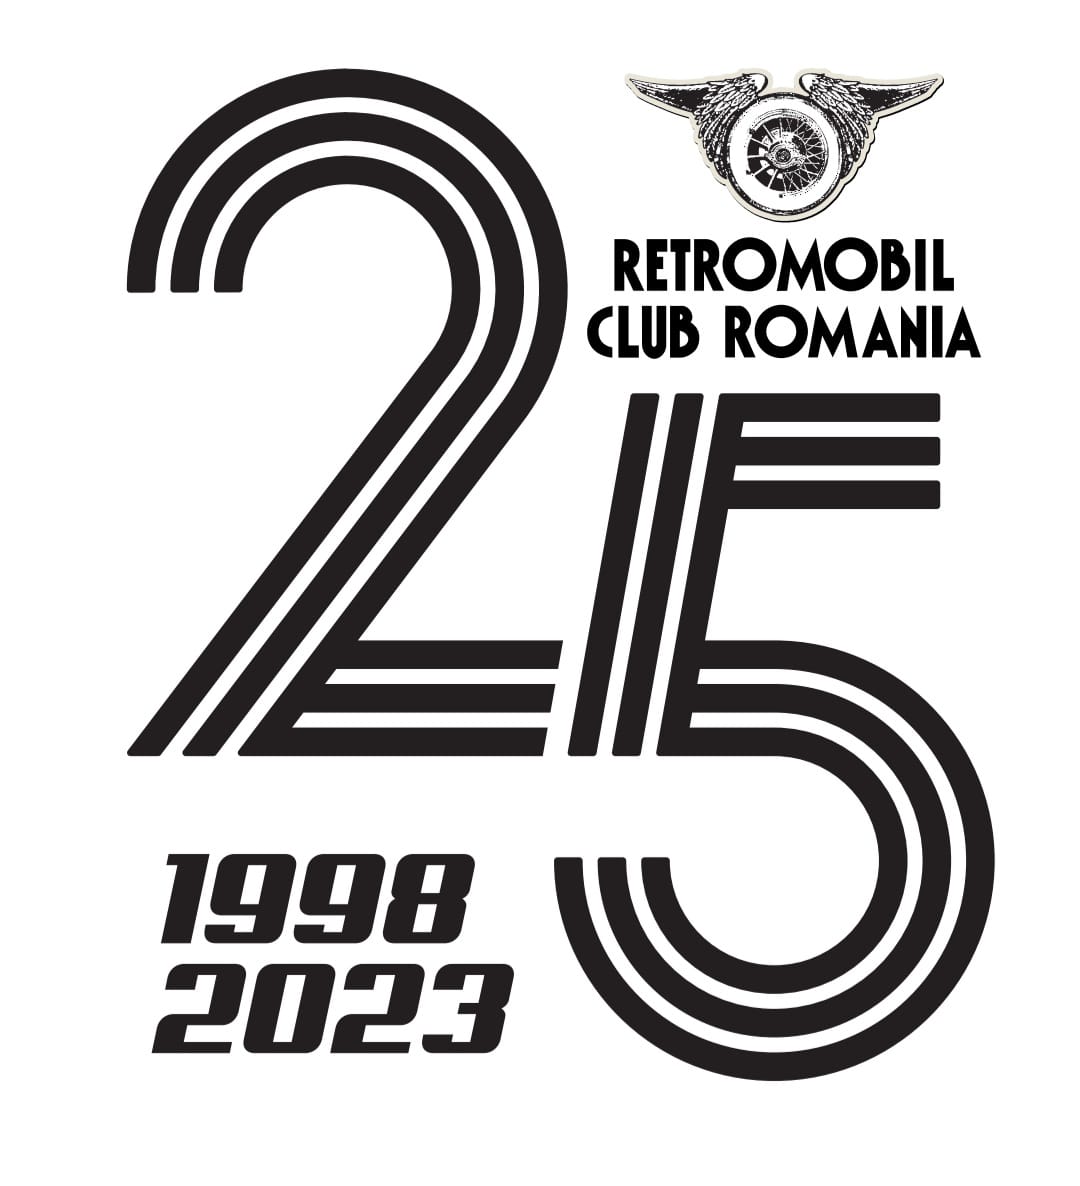 Retromobil Club Romania logo